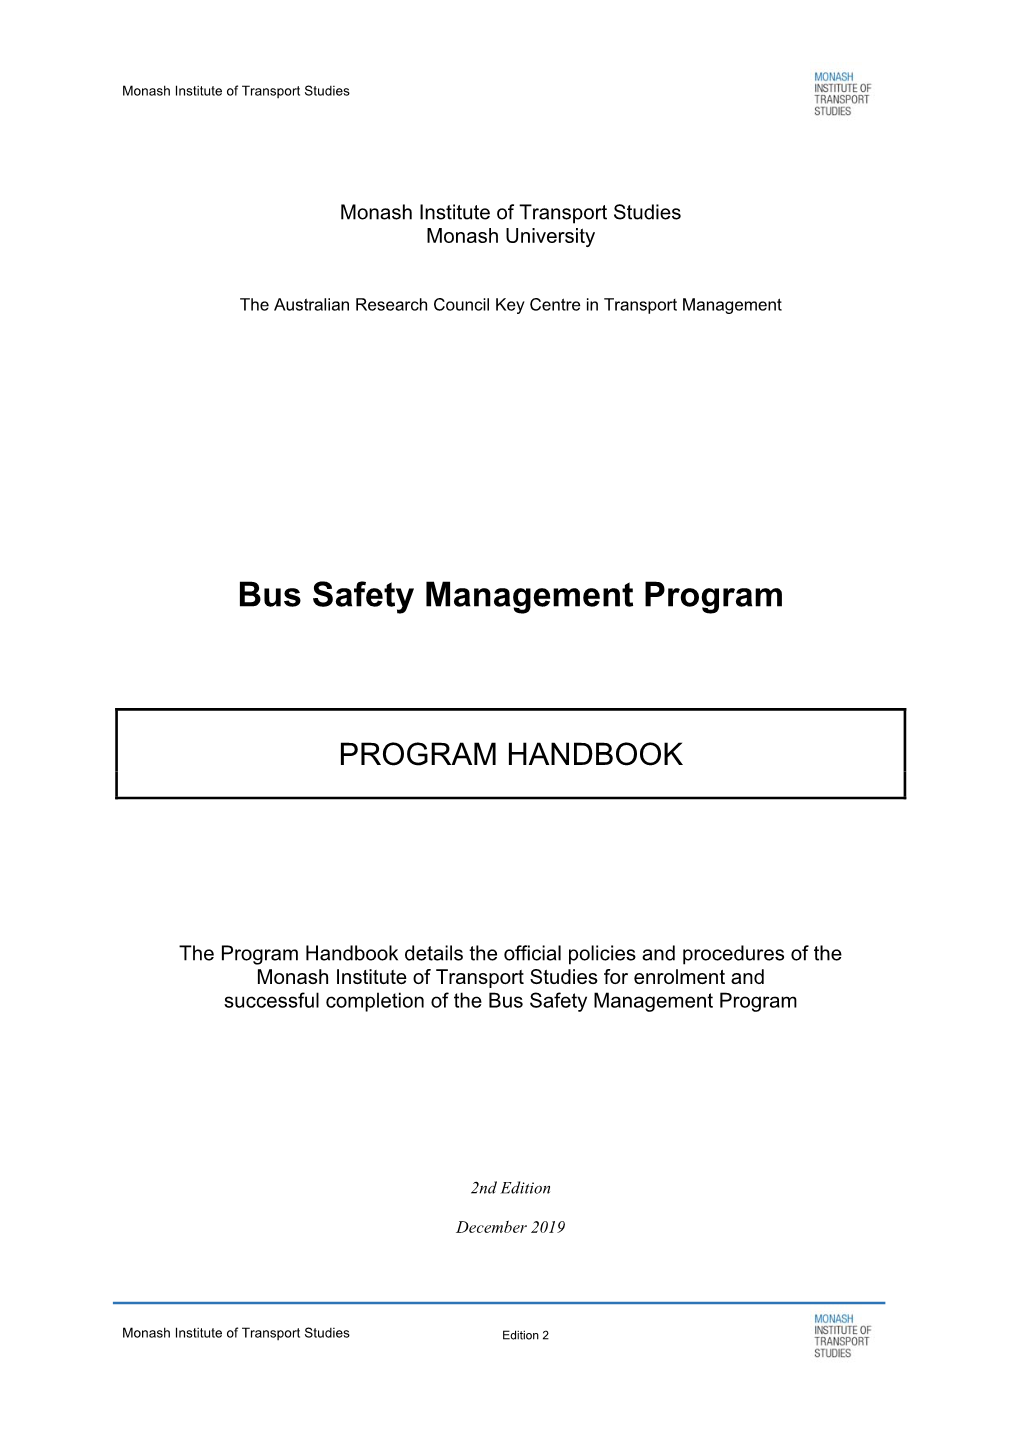 Bus Safety Management Program